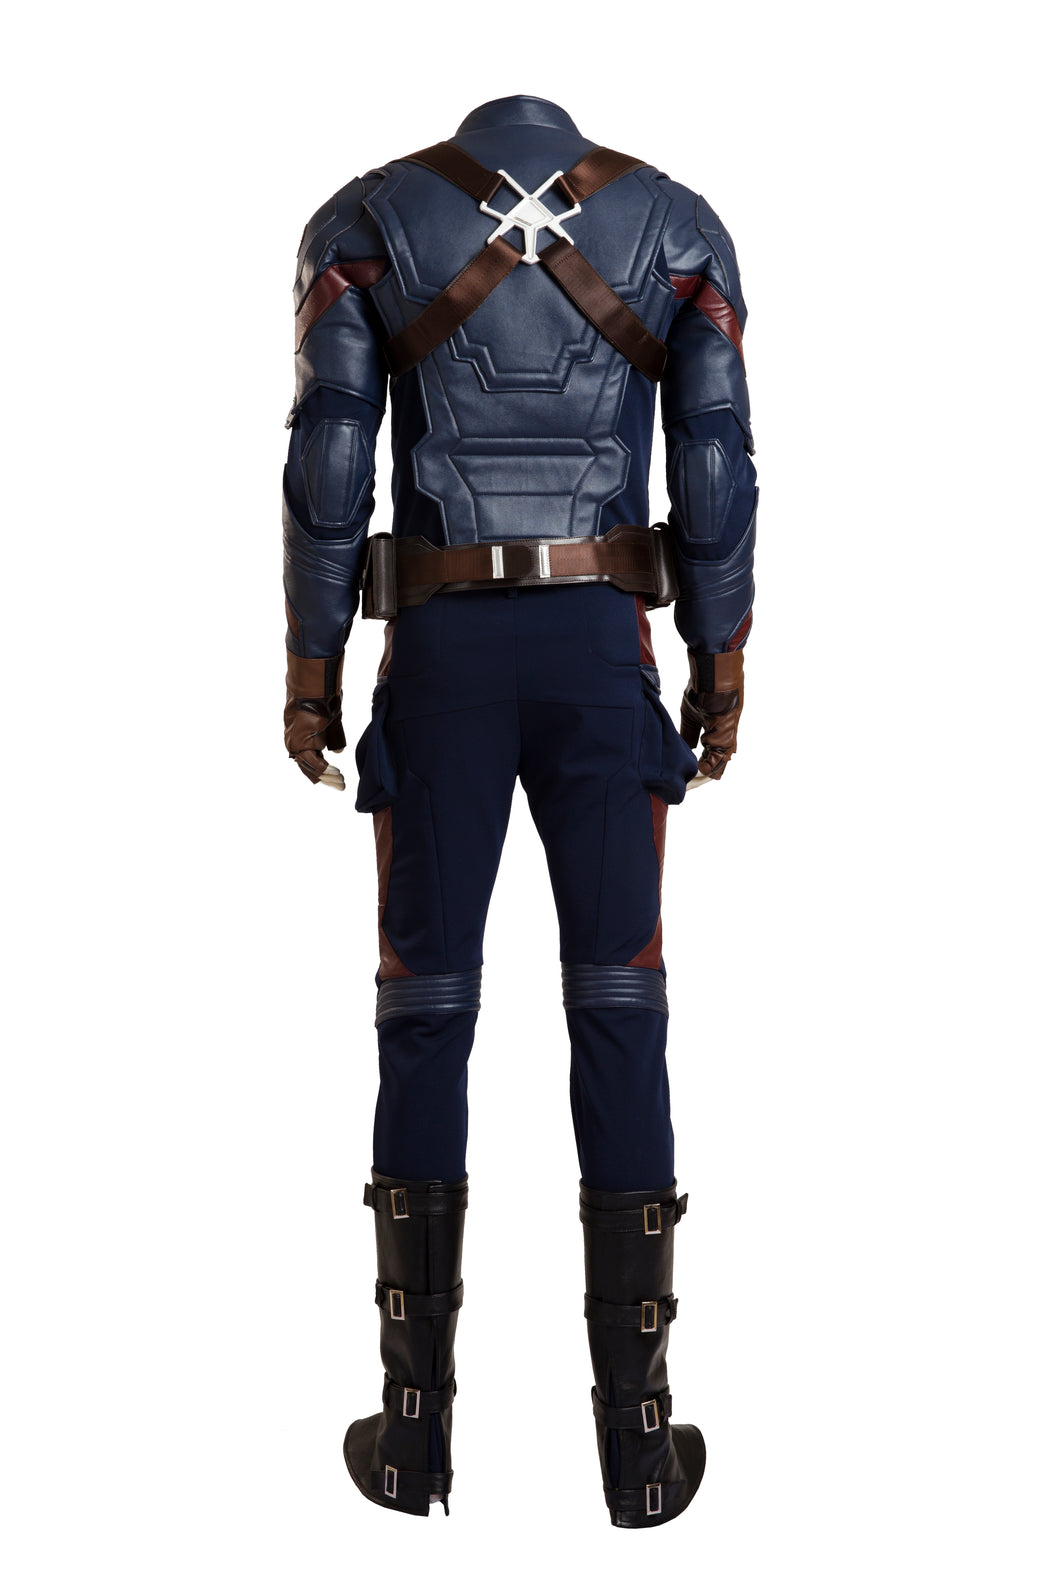 Captain America Full Body Armor Civil War Edition